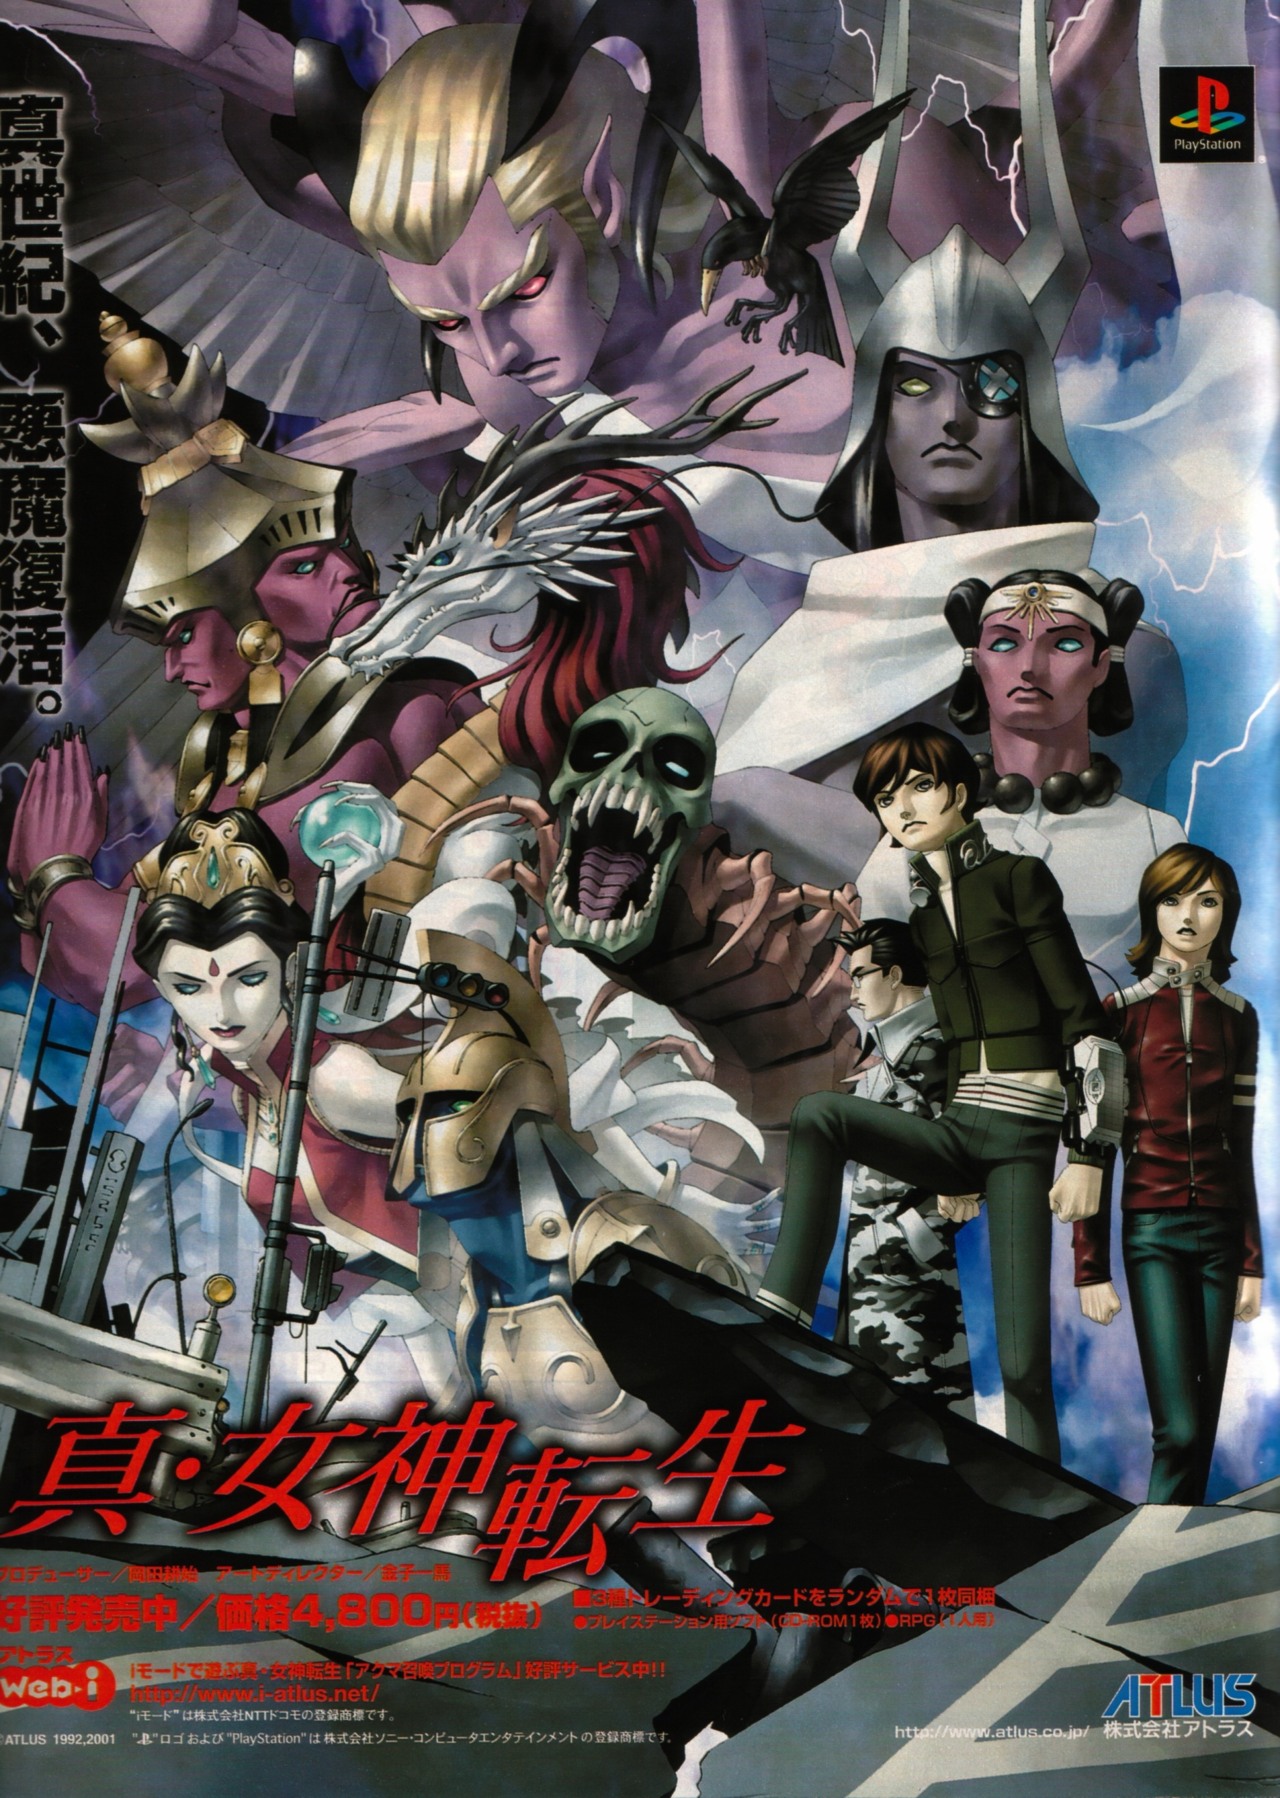 Shin Megami Tensei HD wallpapers, Desktop wallpaper - most viewed